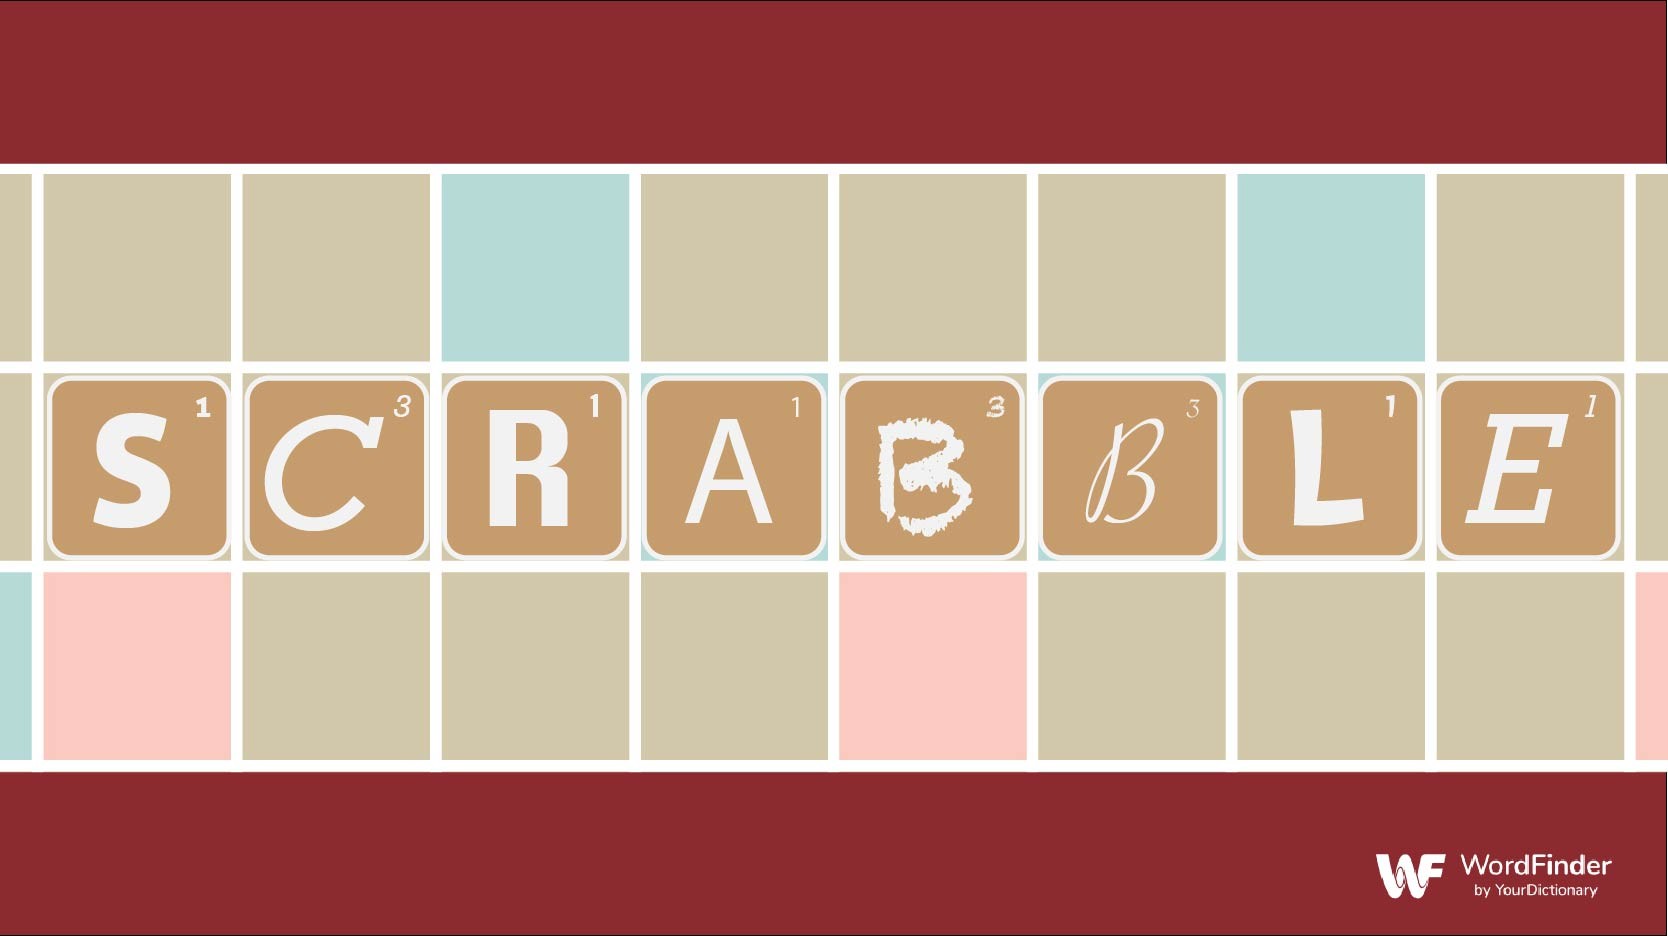 Scrabble tiles in various fonts